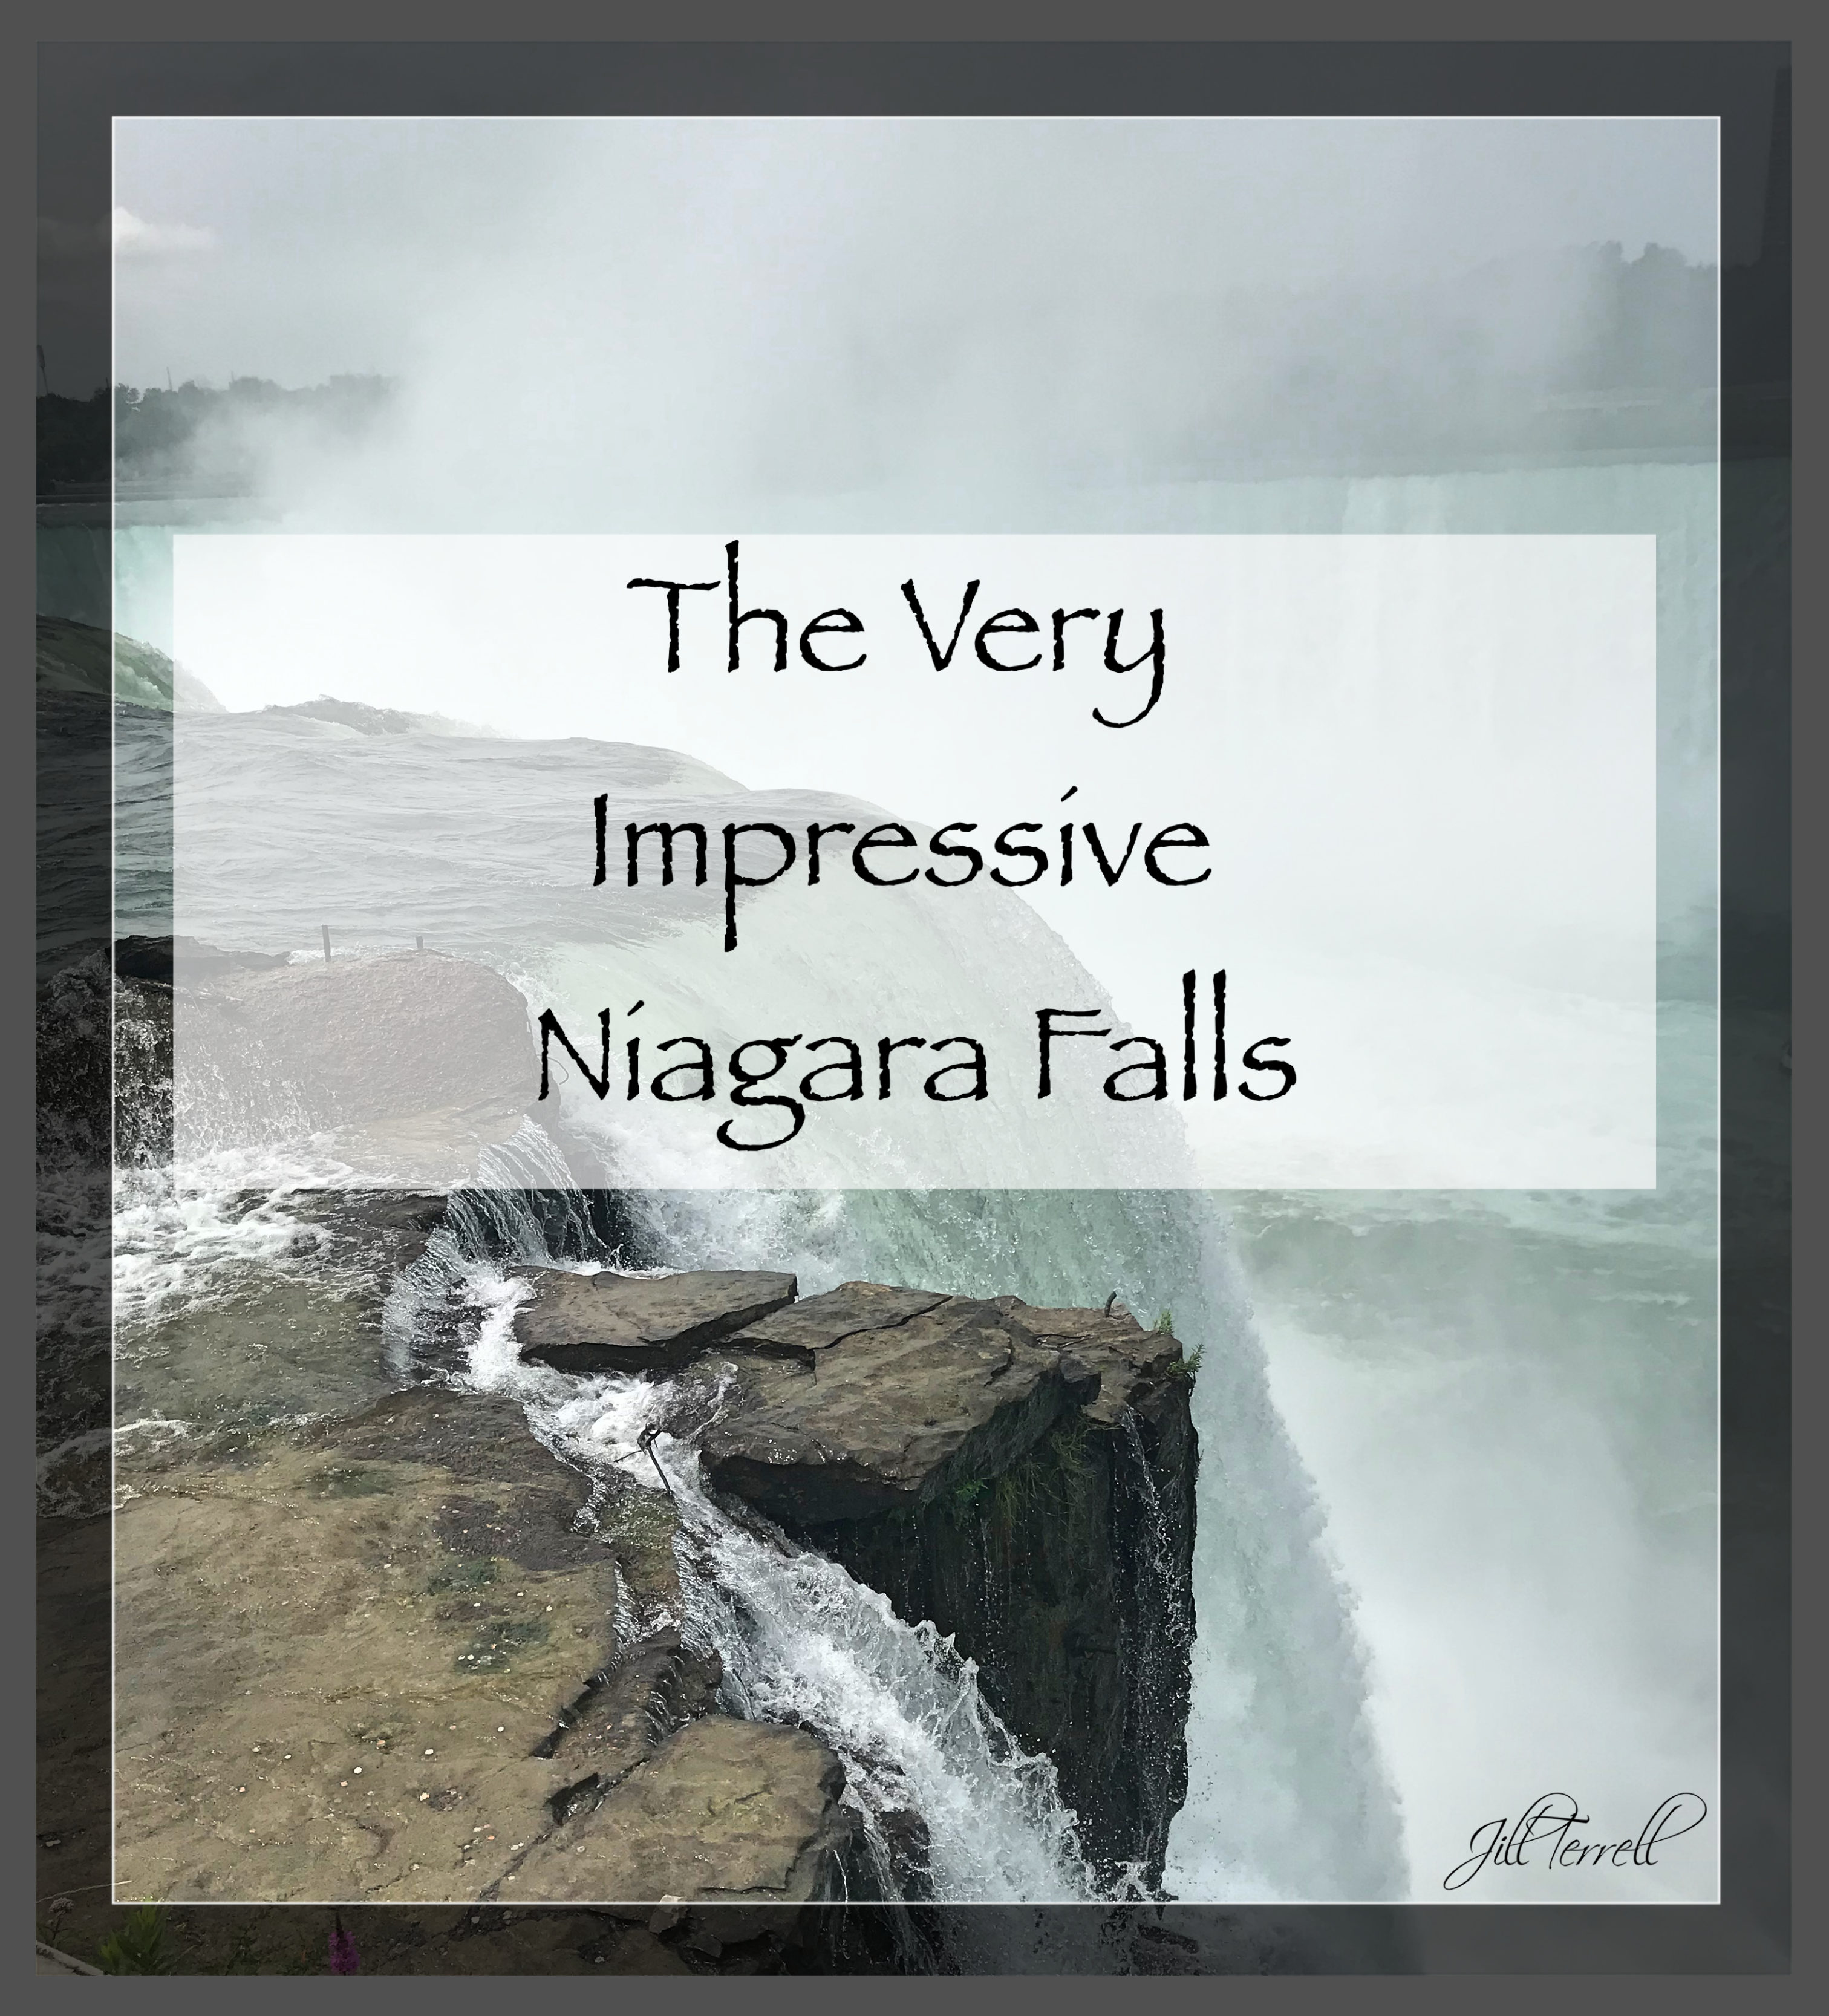 The Very Impressive Niagara Falls